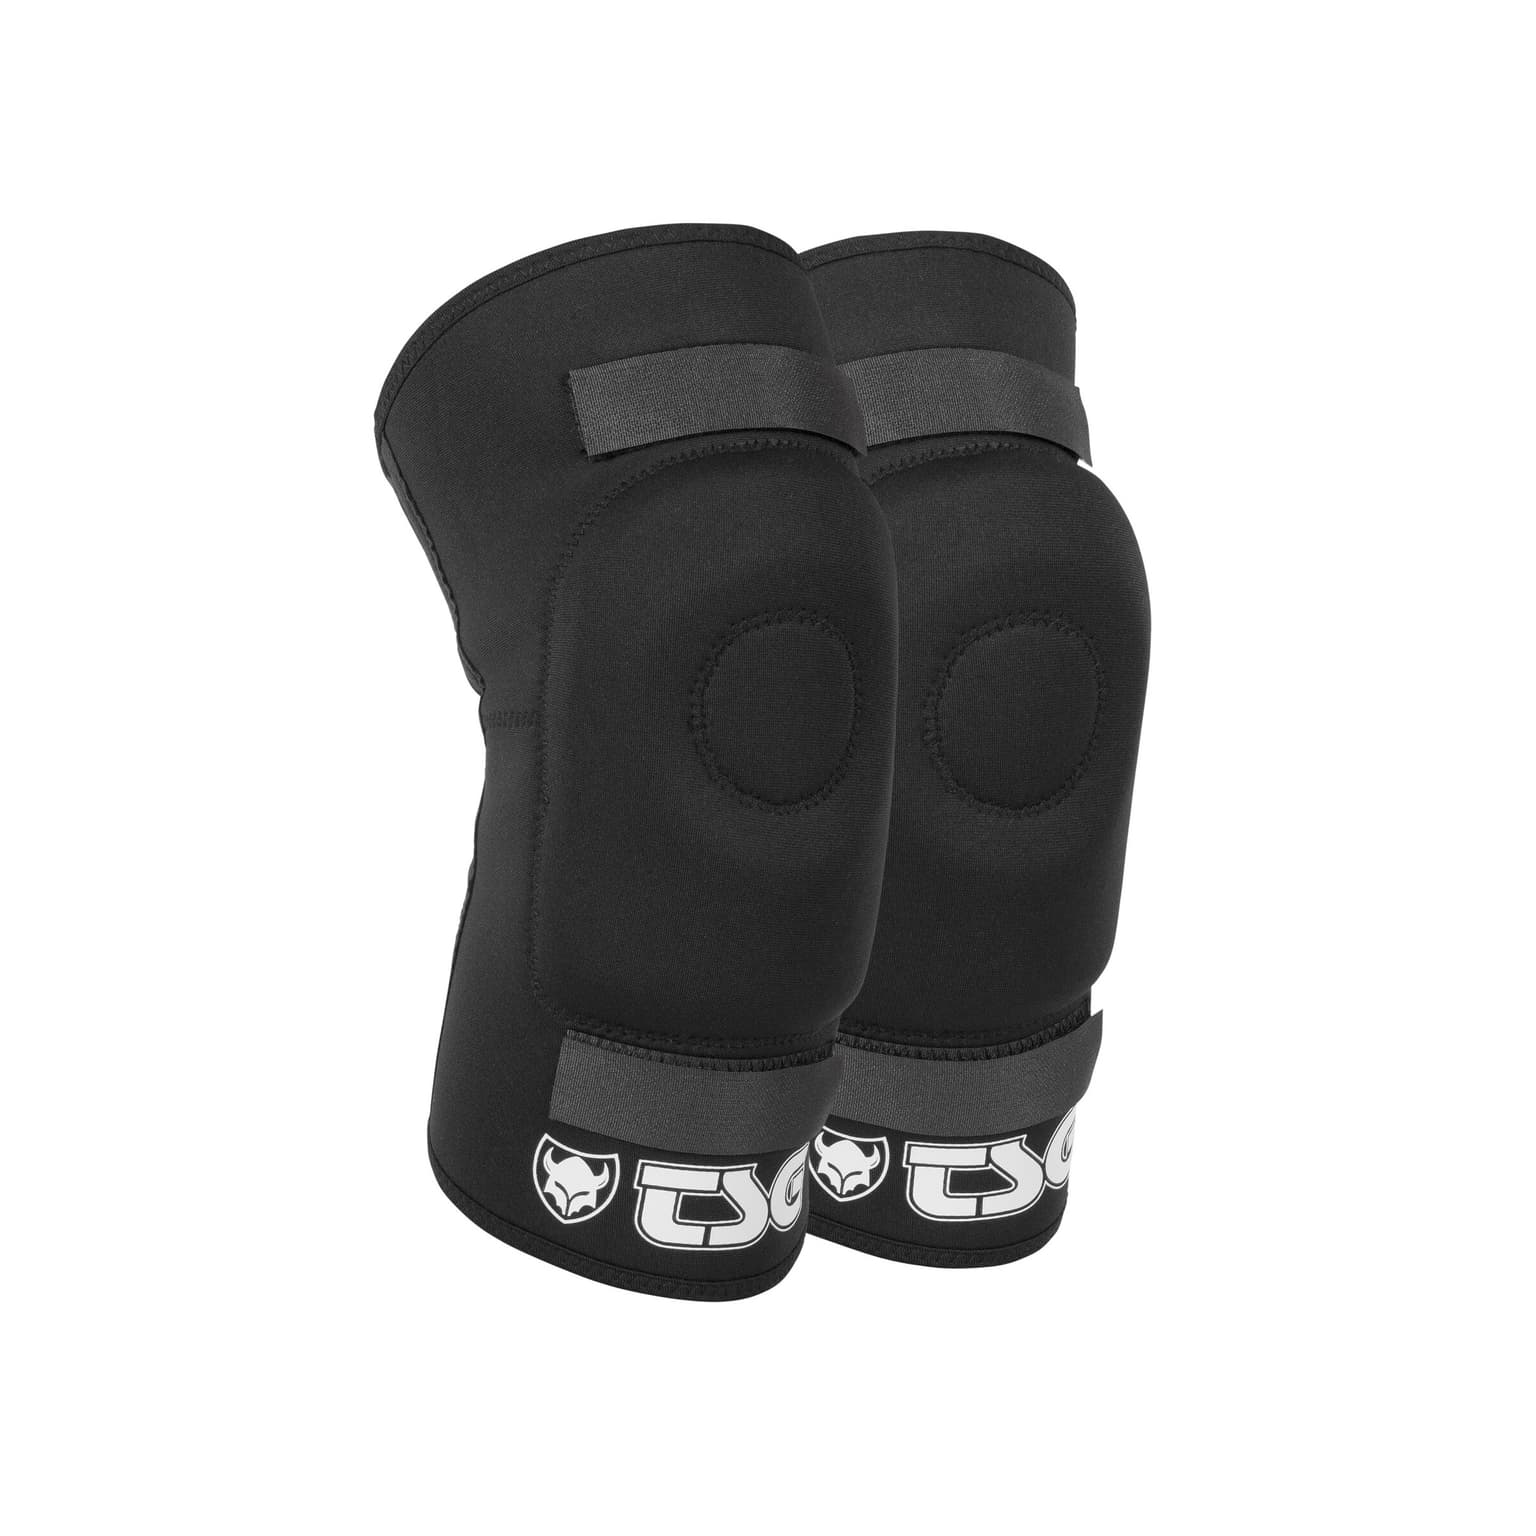 Tsg Tsg Knee-Gasket Brace AD Protections noir 1